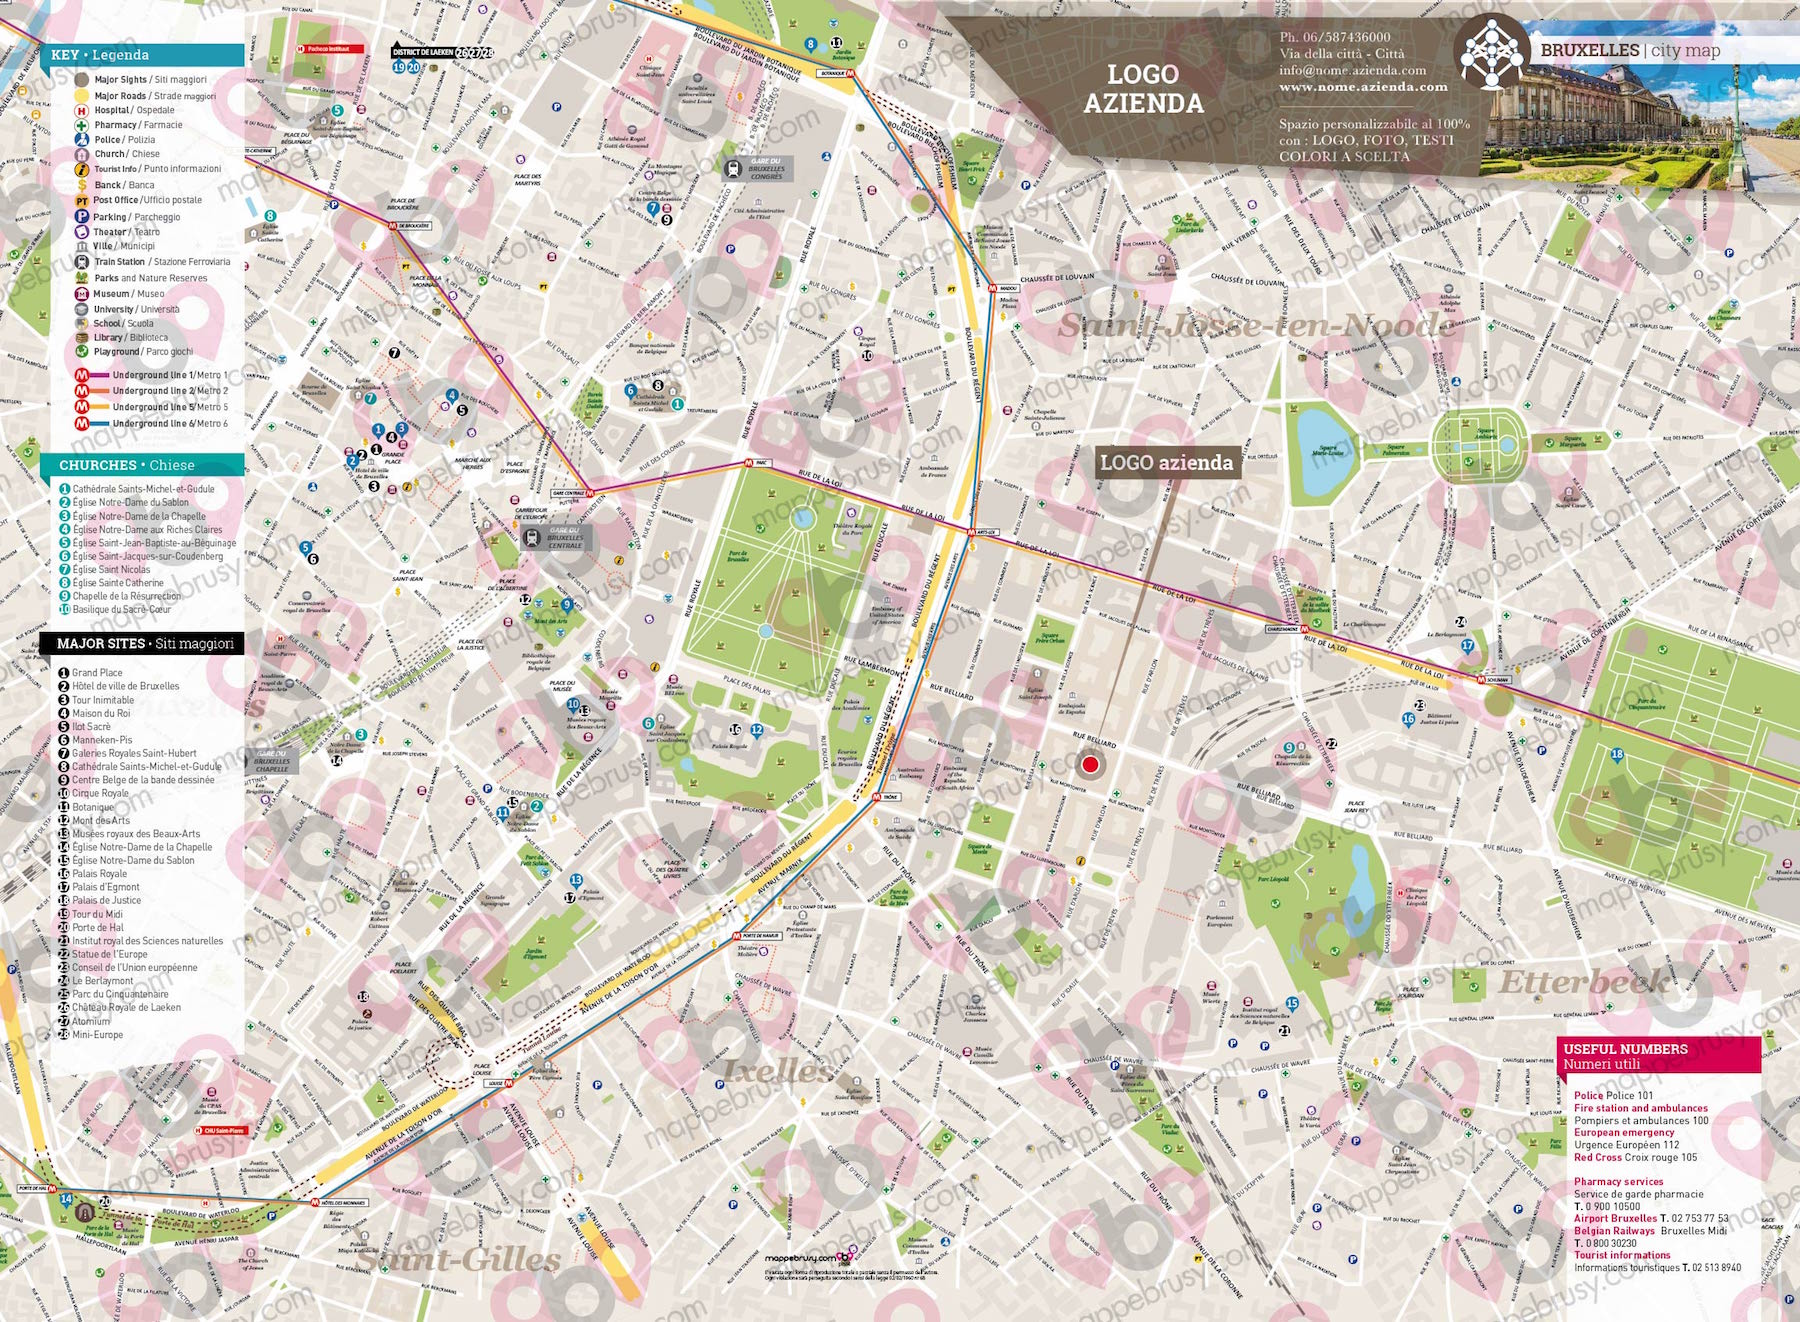 Mappa di Bruxelles - Bruxelles city map - mappa Bruxelles - mappa personalizzata di Bruxelles - mappa tursitica di Bruxelles